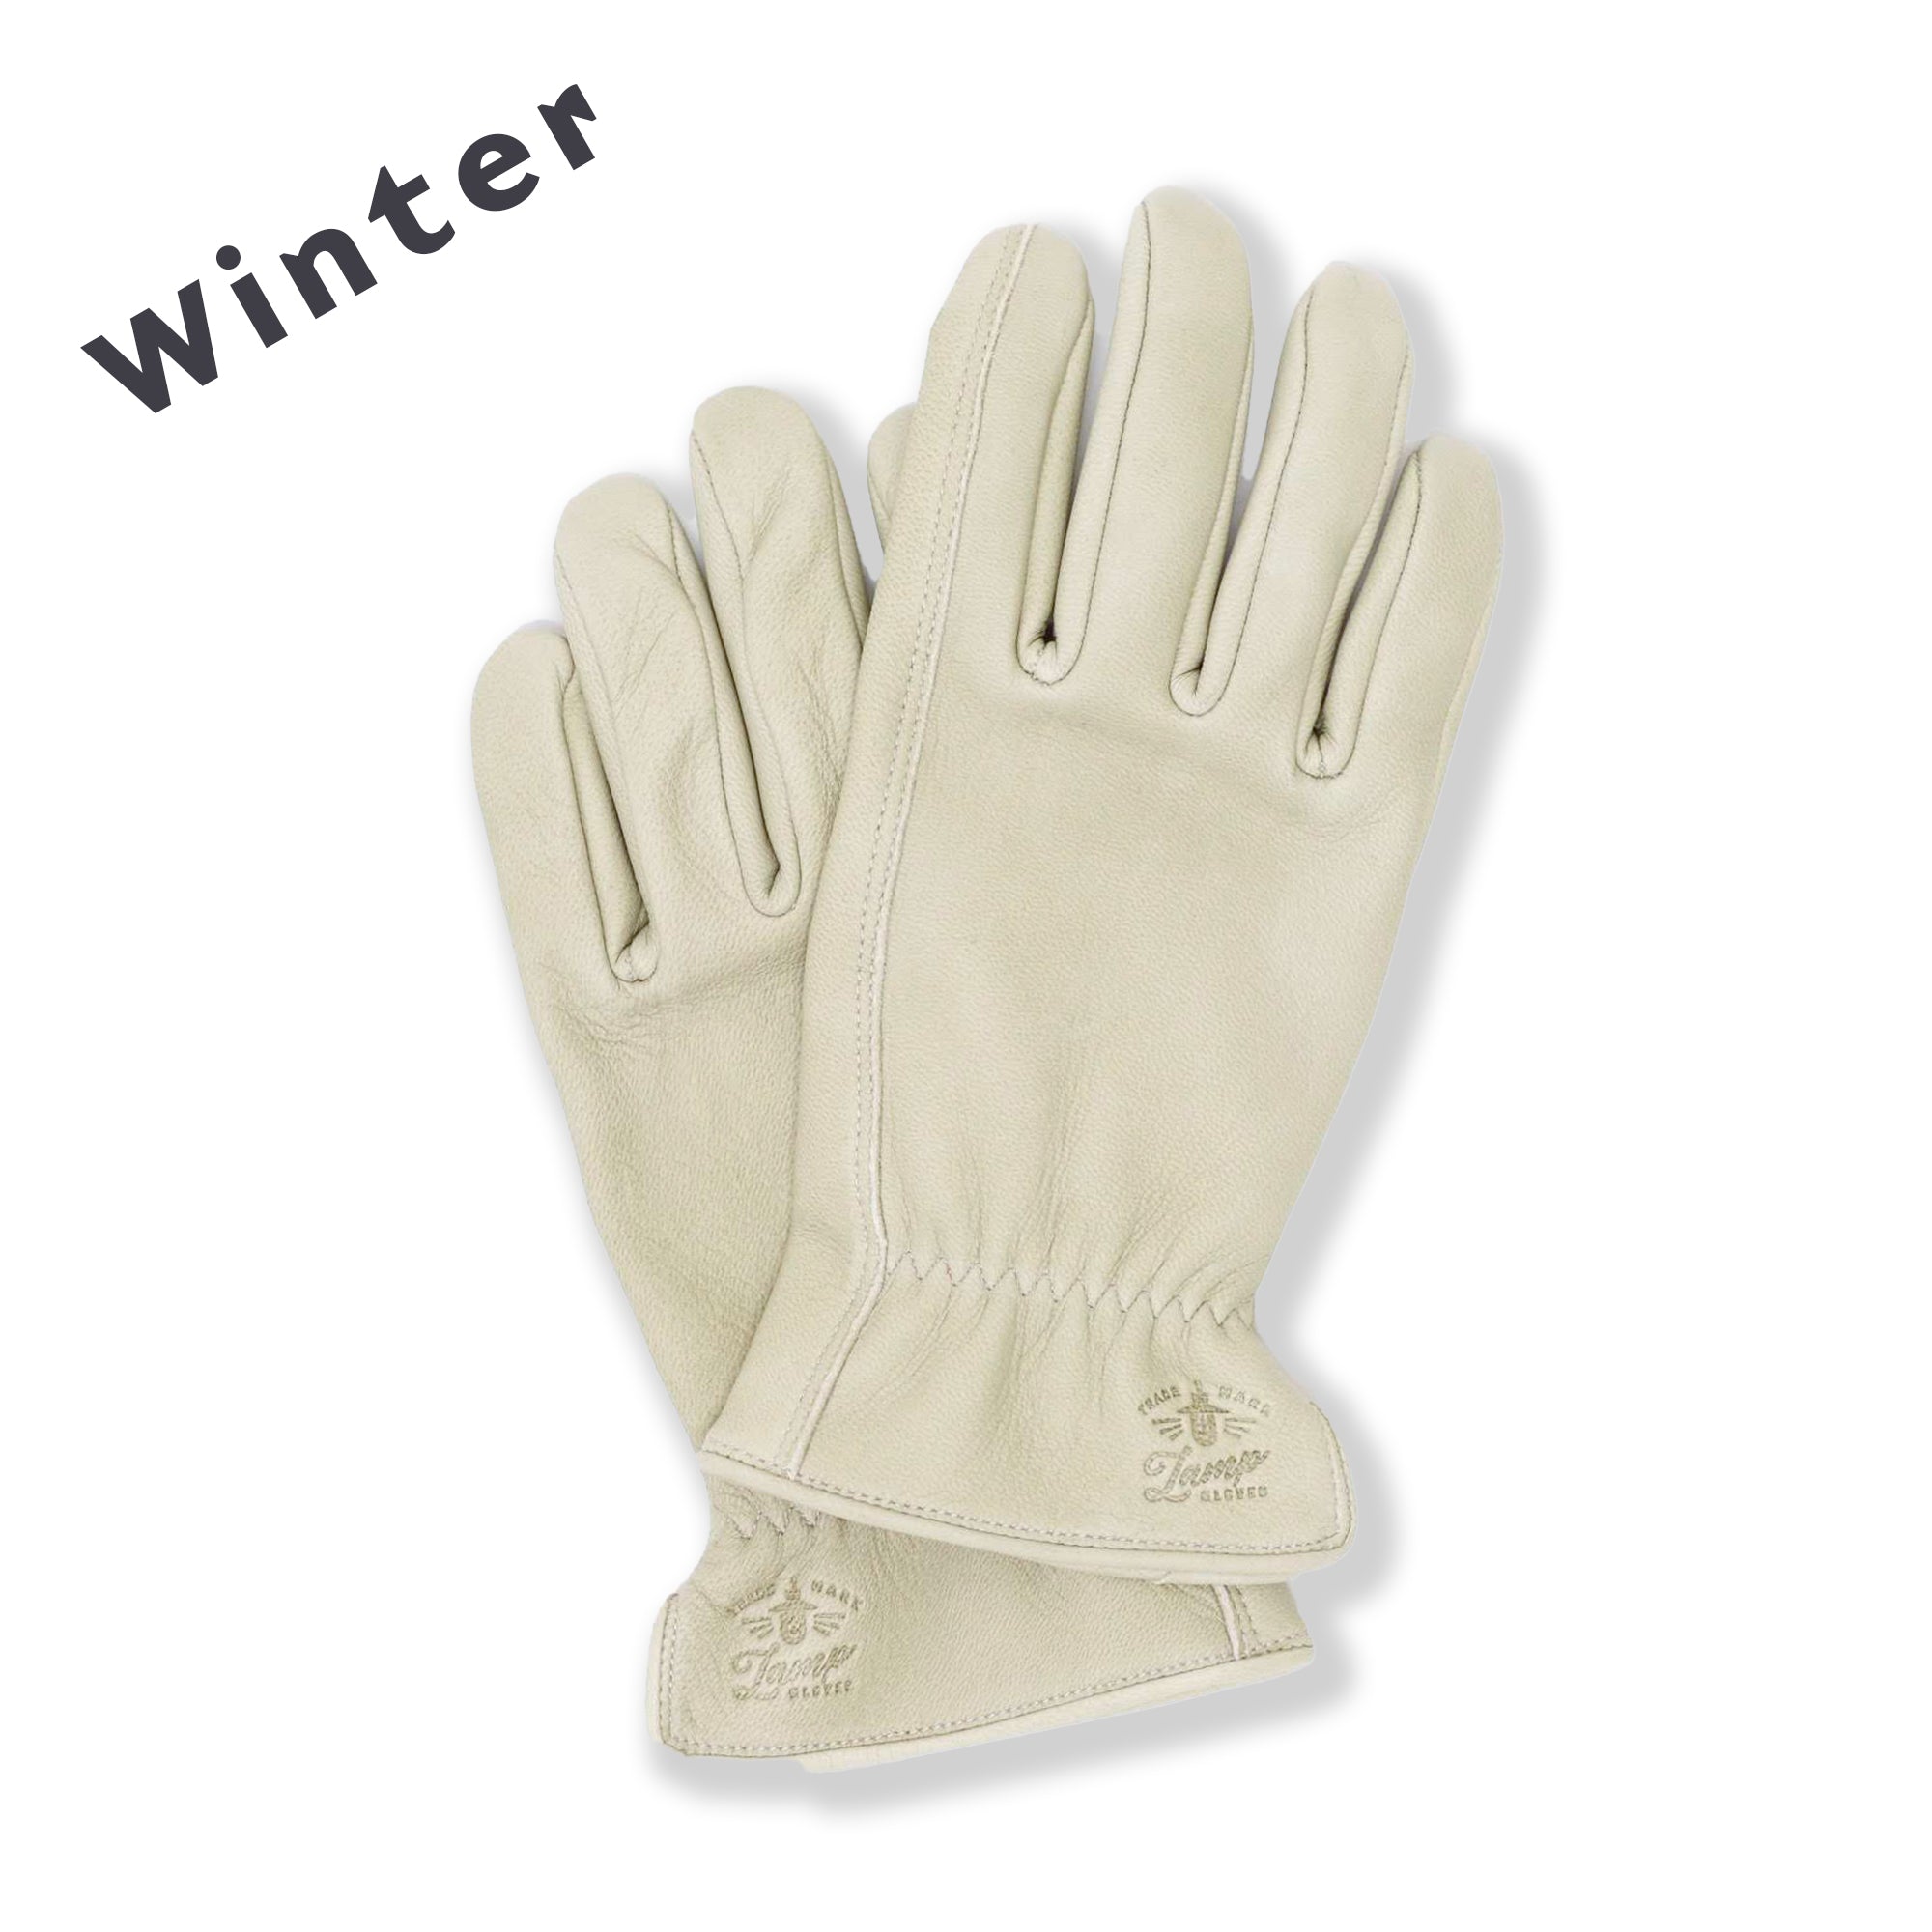 Lamp gloves -Winter glove- GREIGE – anemoscope